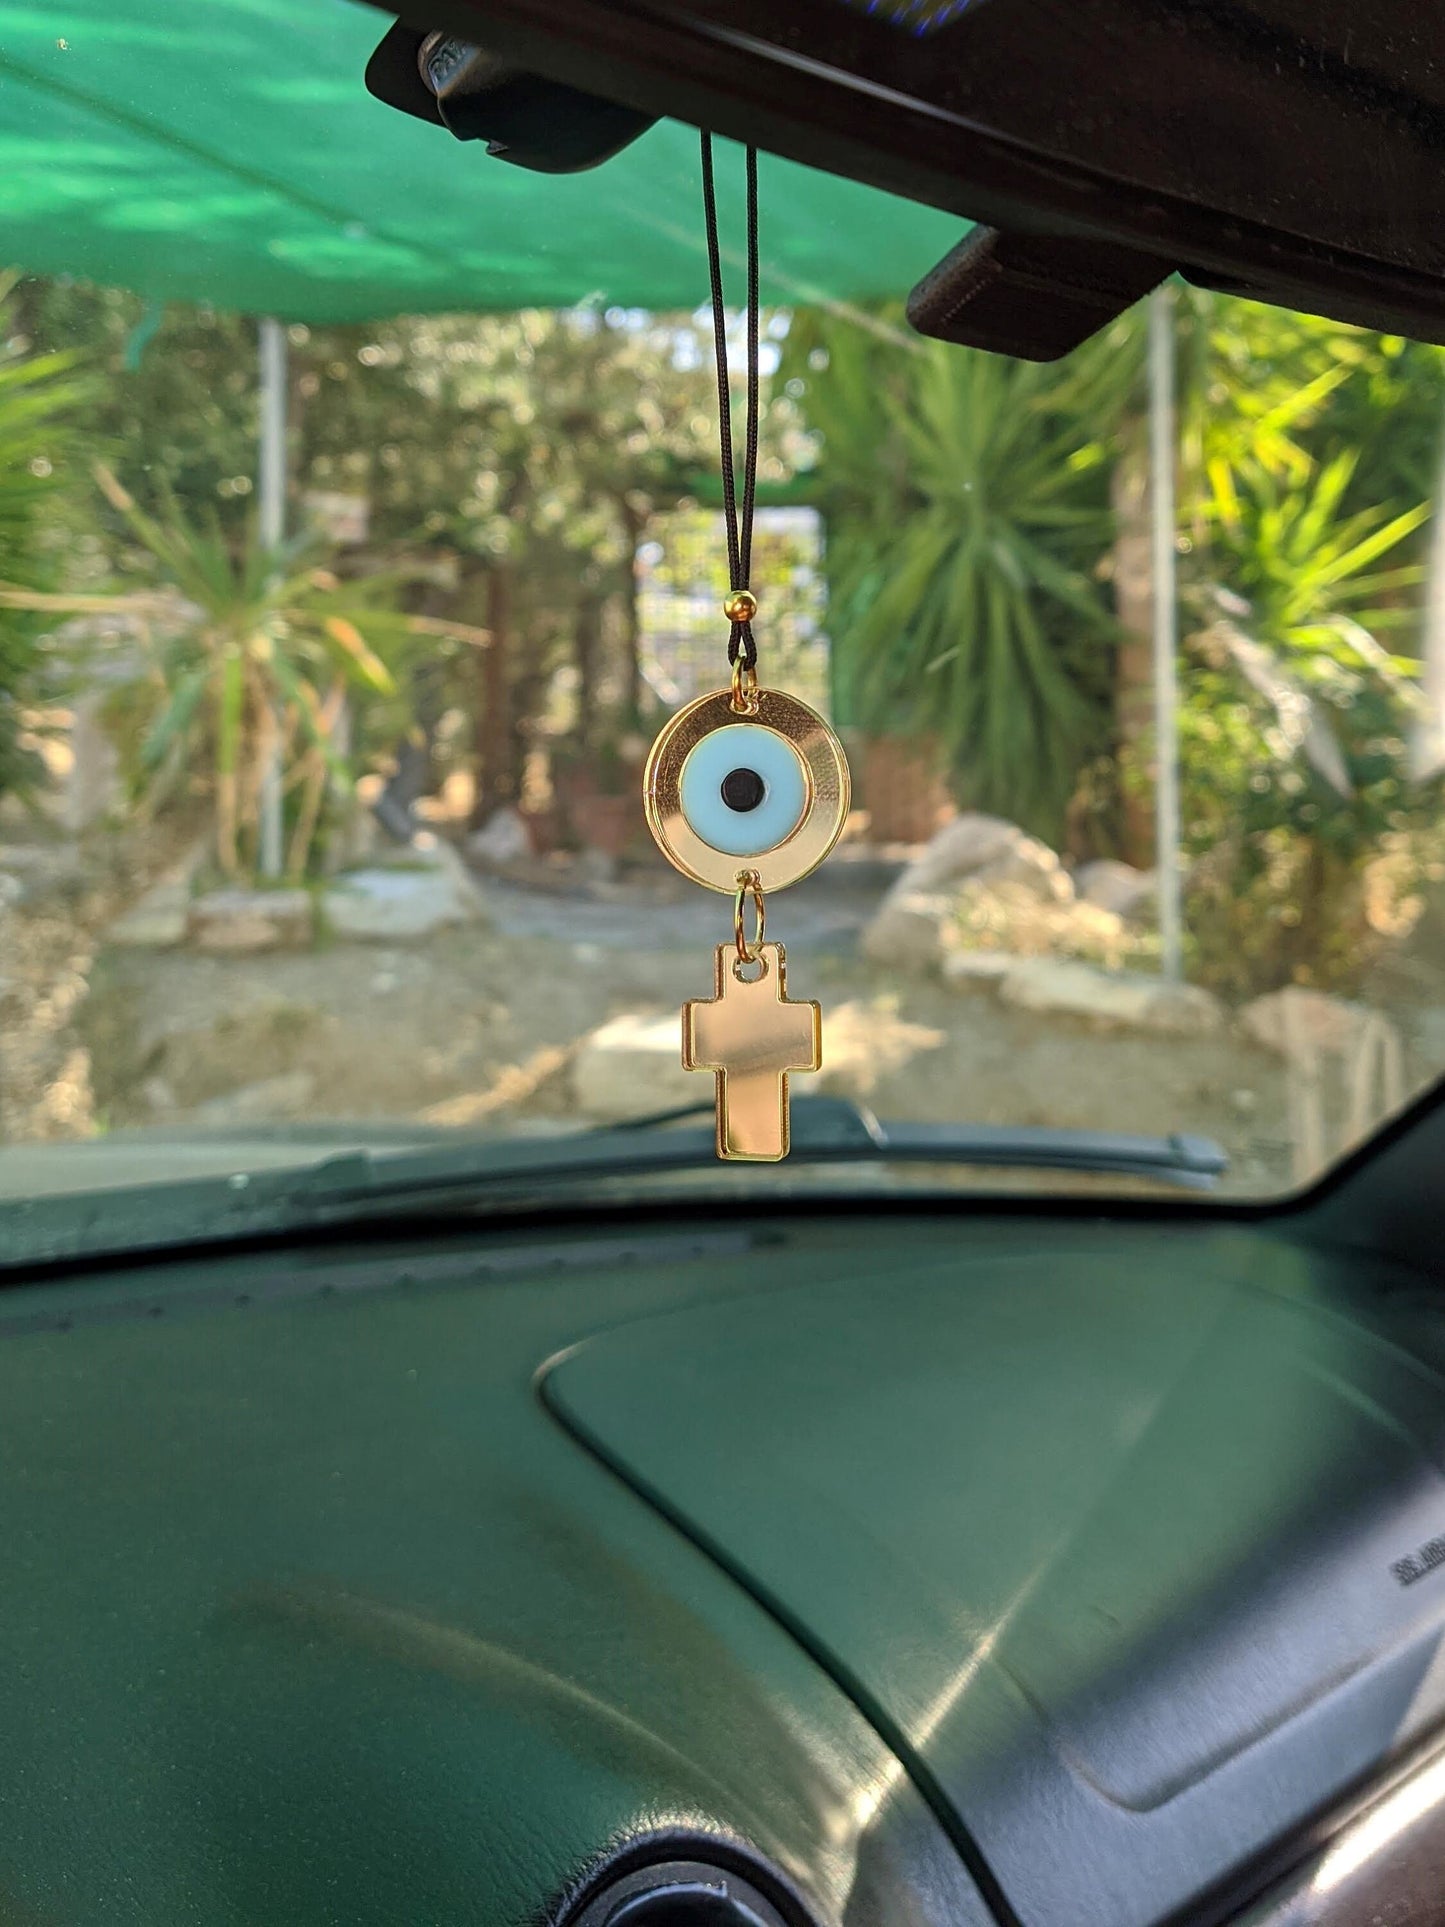 Evil eye cross car charm -  Vehicle mirror charm - Car protection - New driver gift